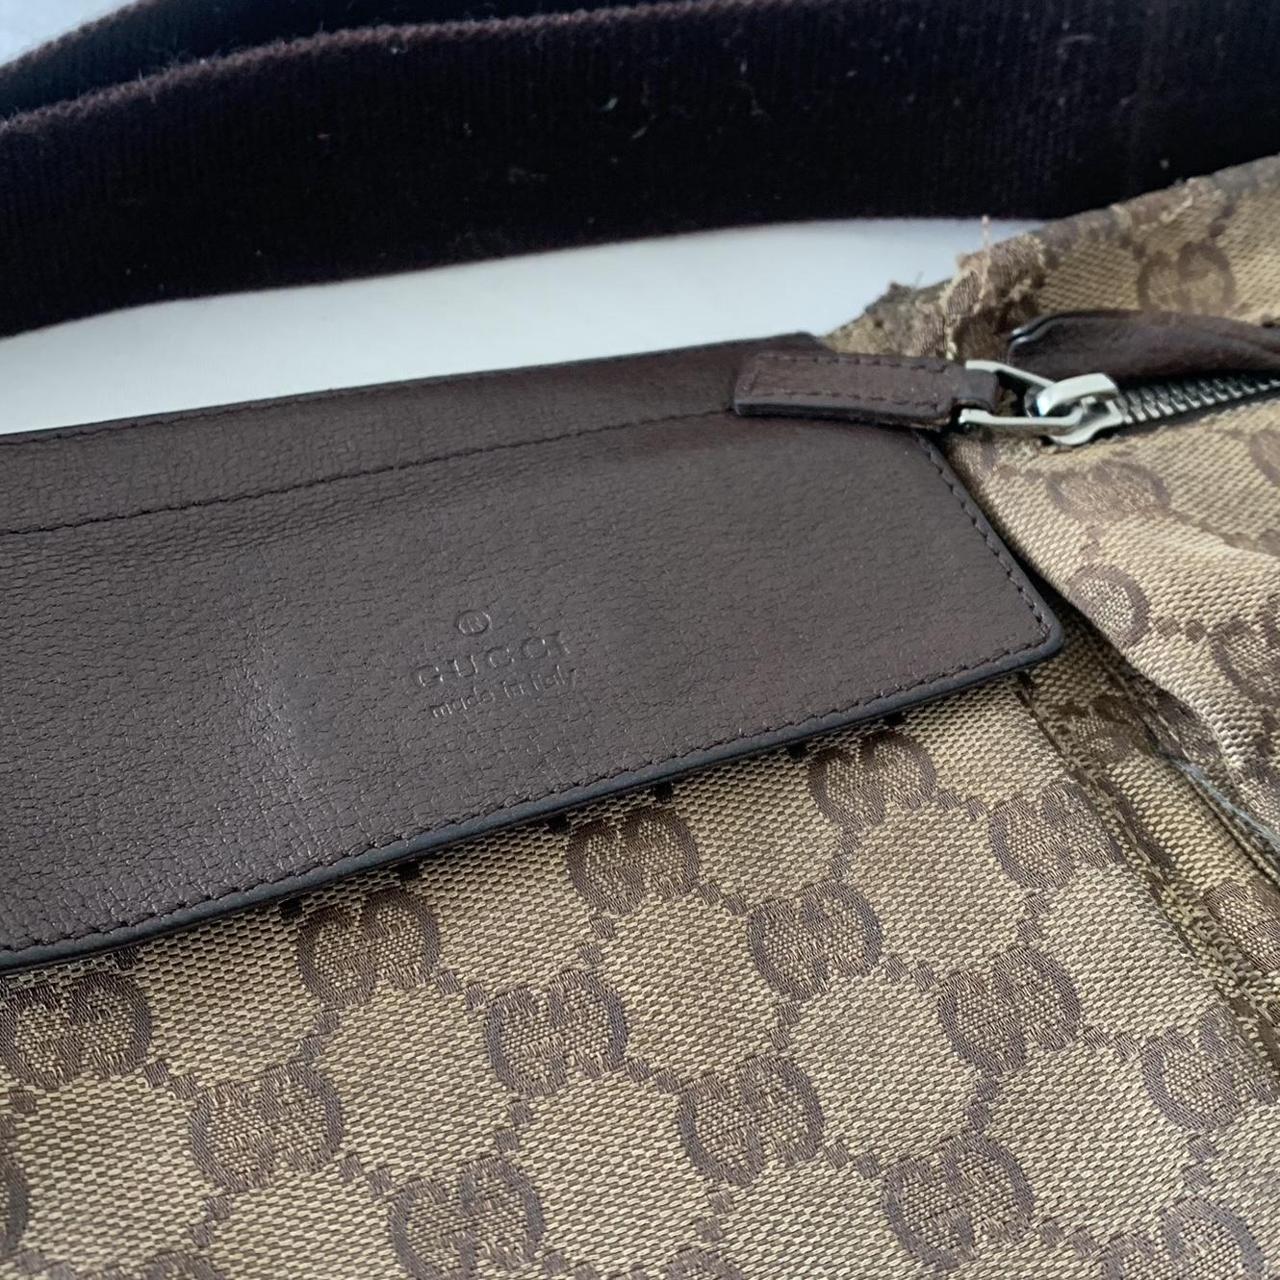 Vintage Gucci belt bag Used but in good condition, - Depop